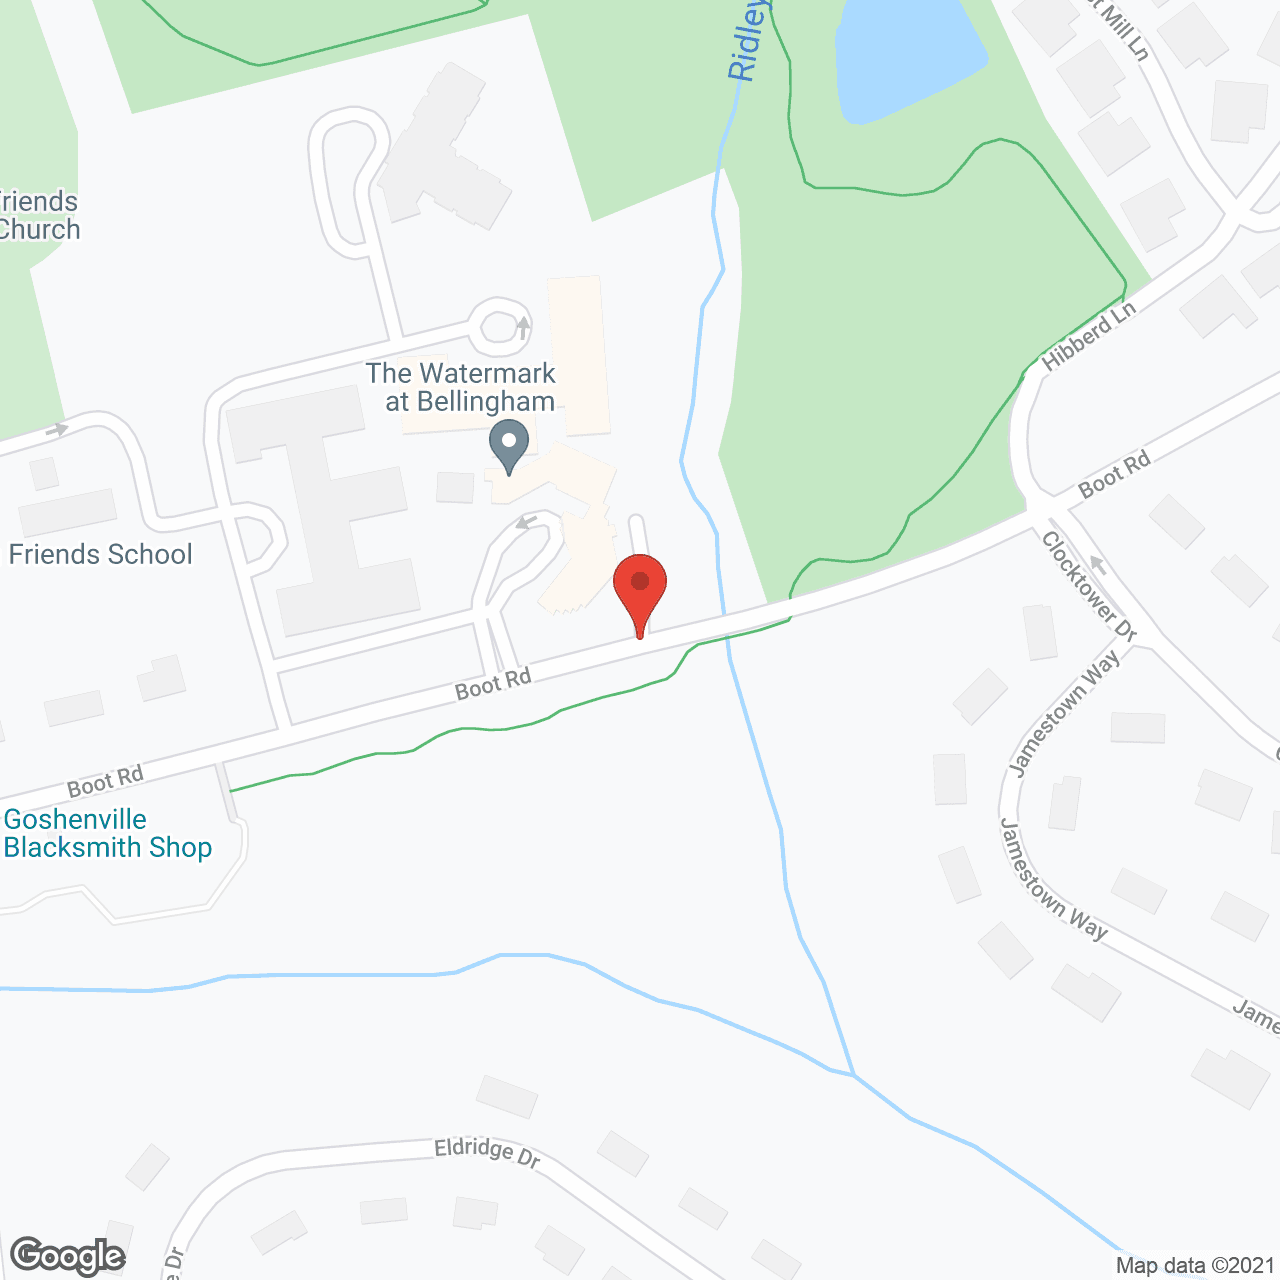 The Watermark at Bellingham in google map